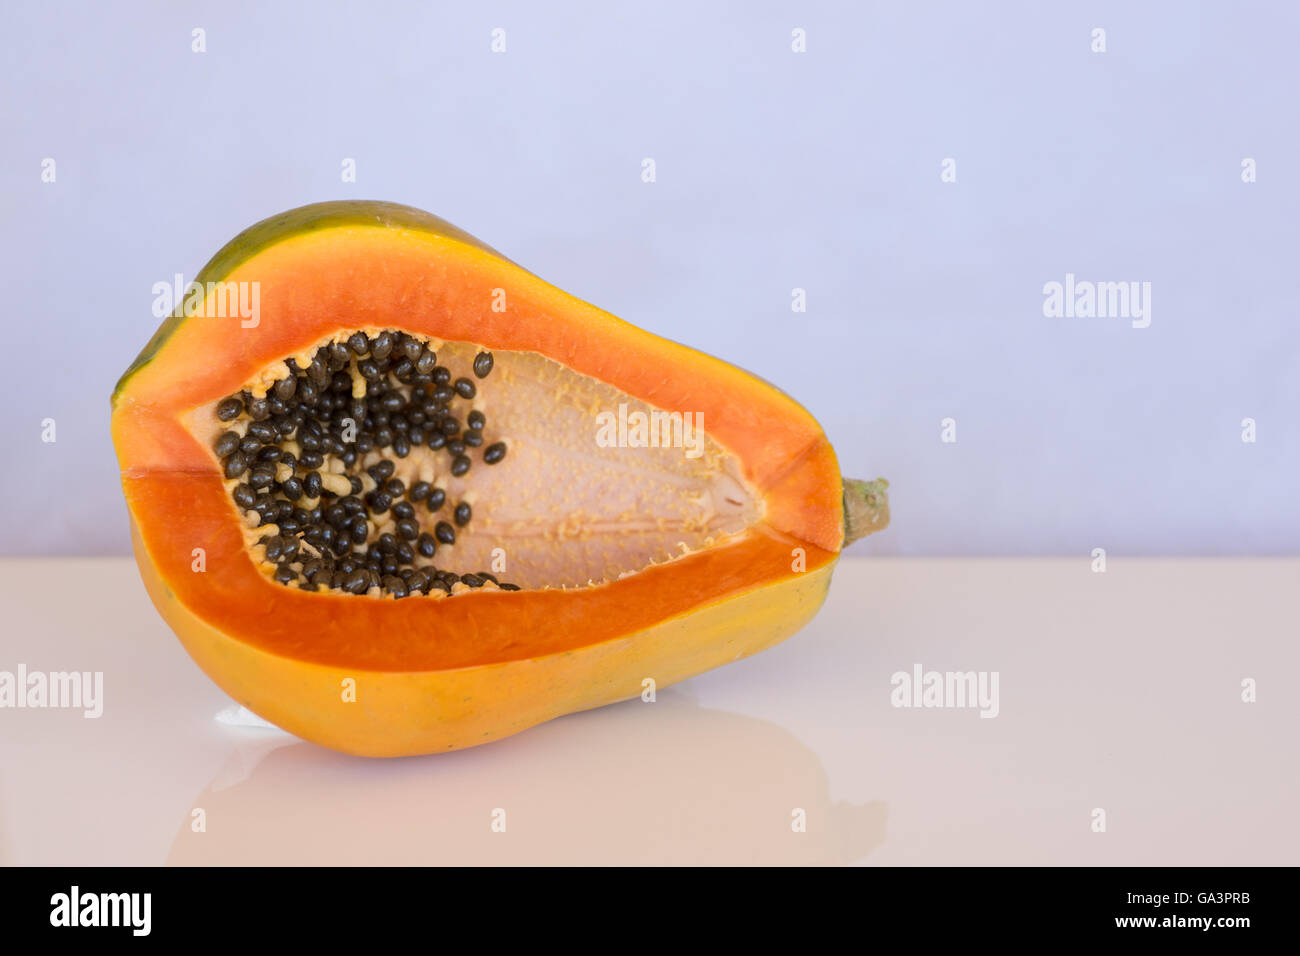 Ripe papaya / paw paw with orange flesh and seeds with copyspace Stock Photo